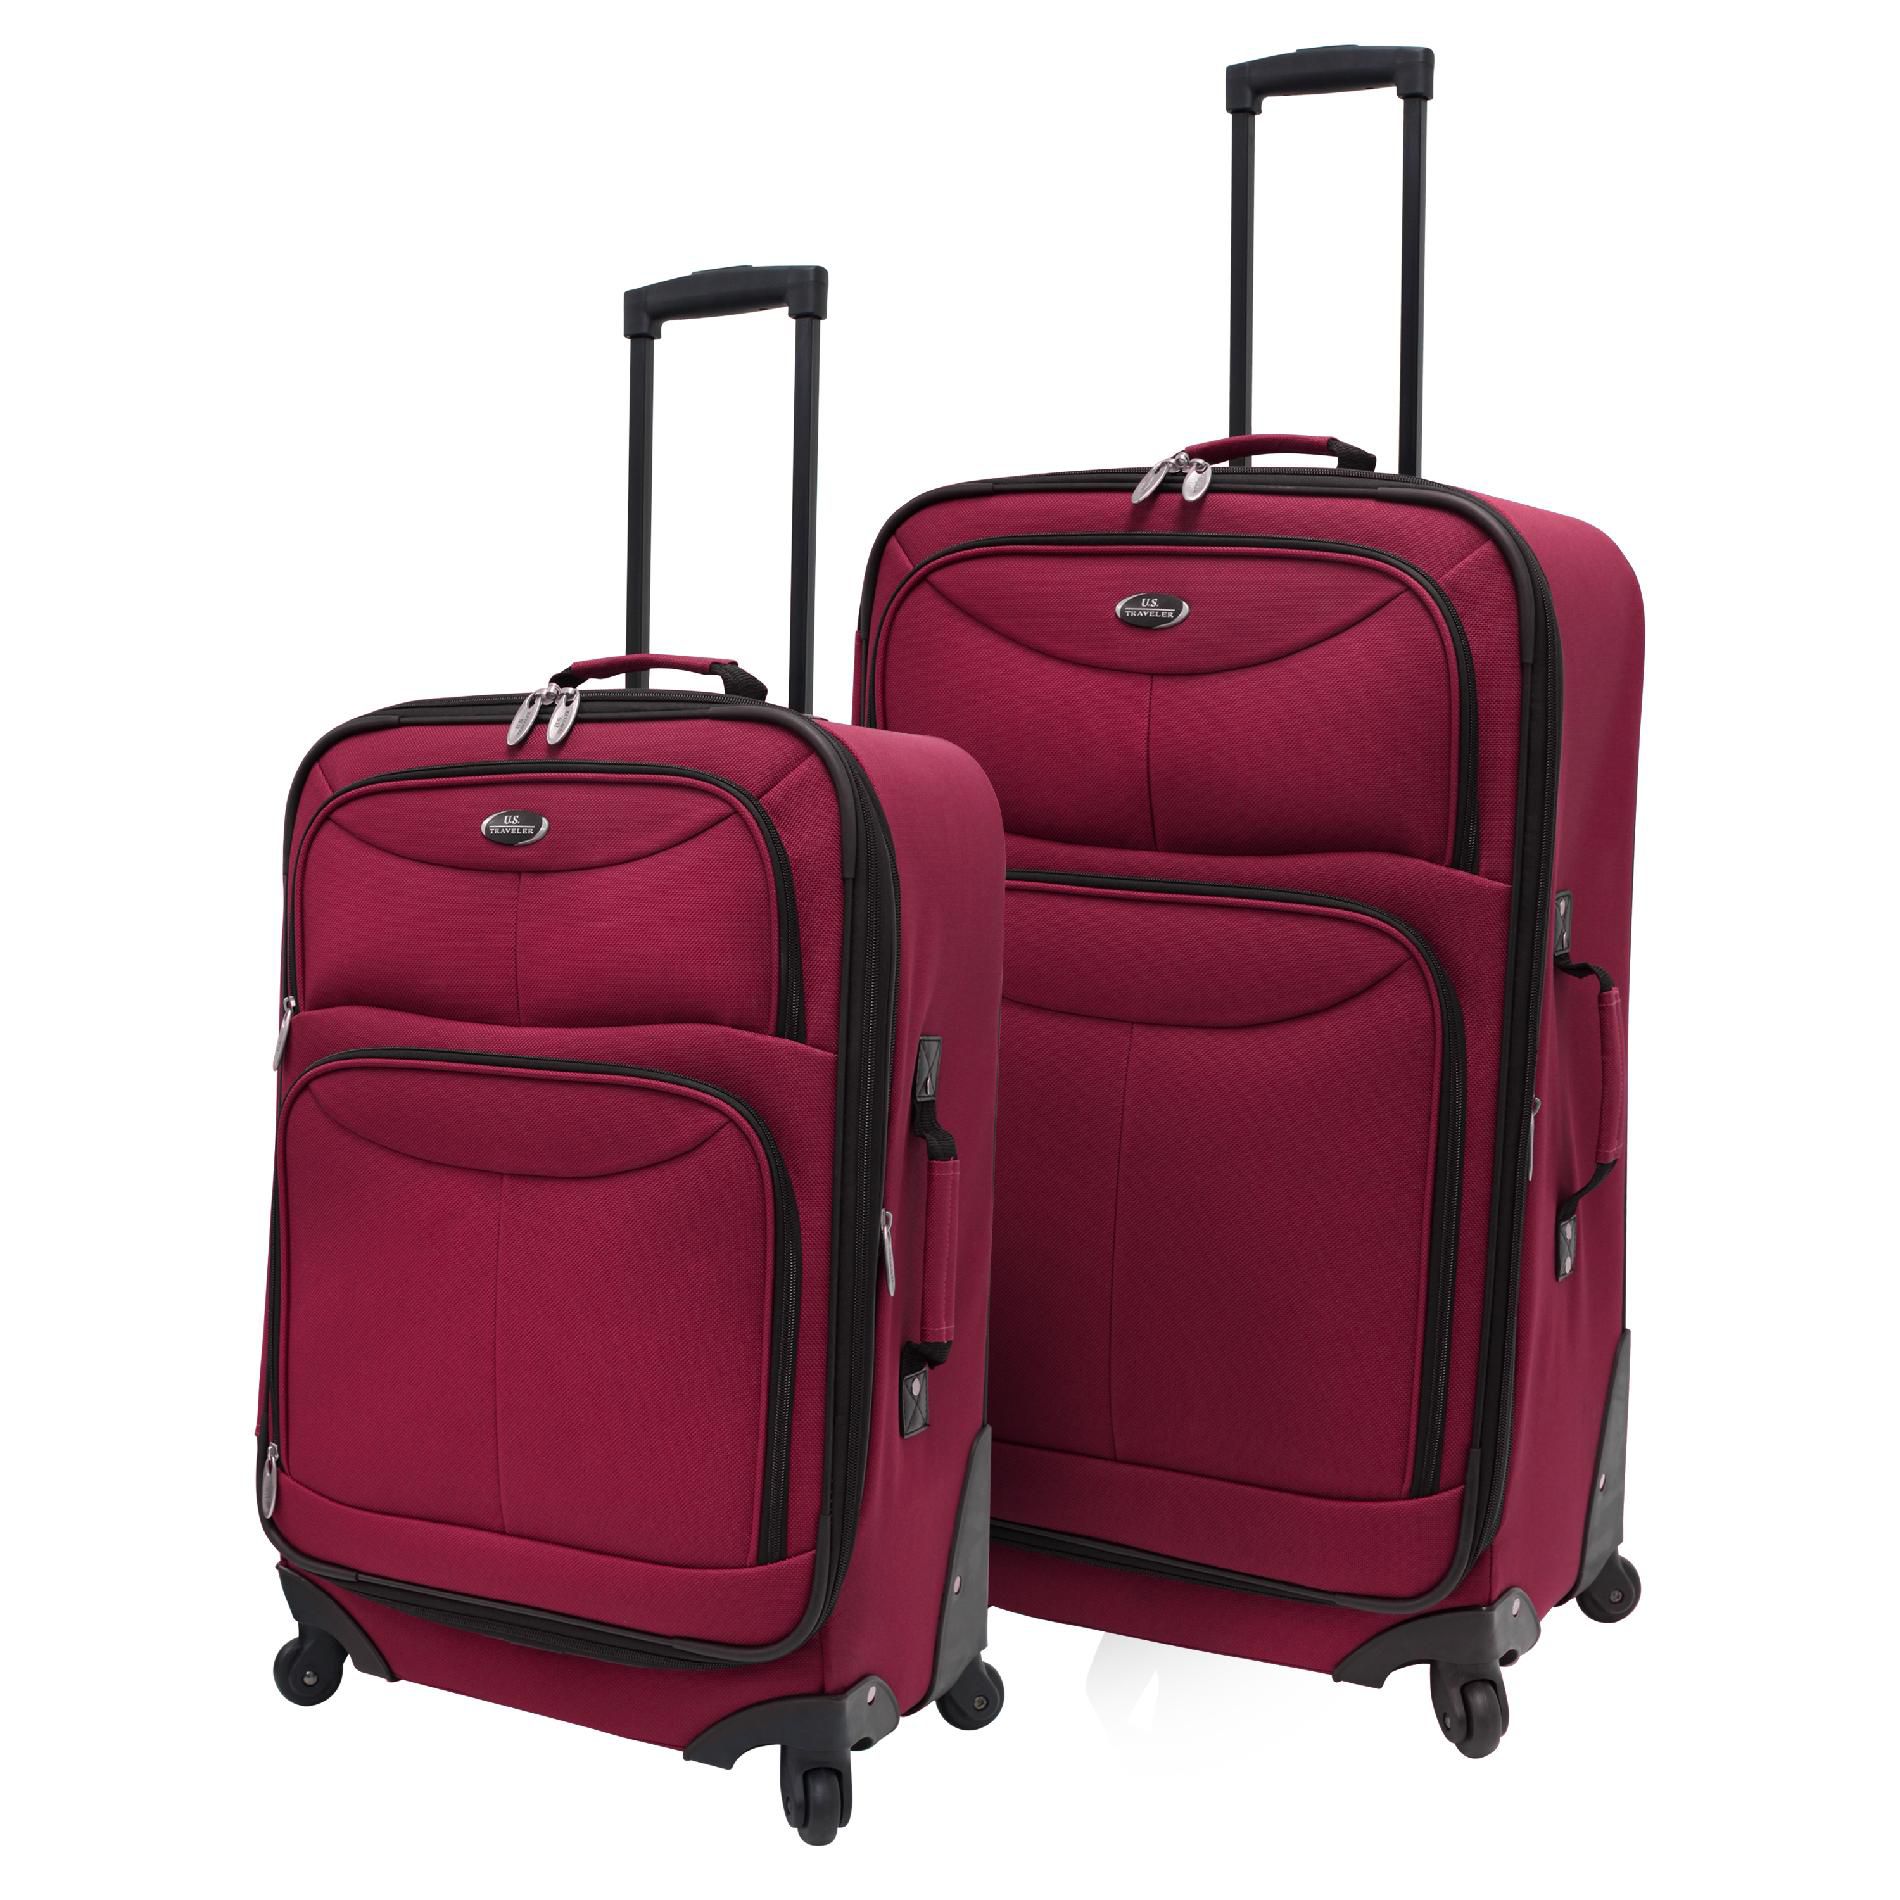 U.S. Traveler Fashion 2-piece Spinner Luggage Set, Maroon